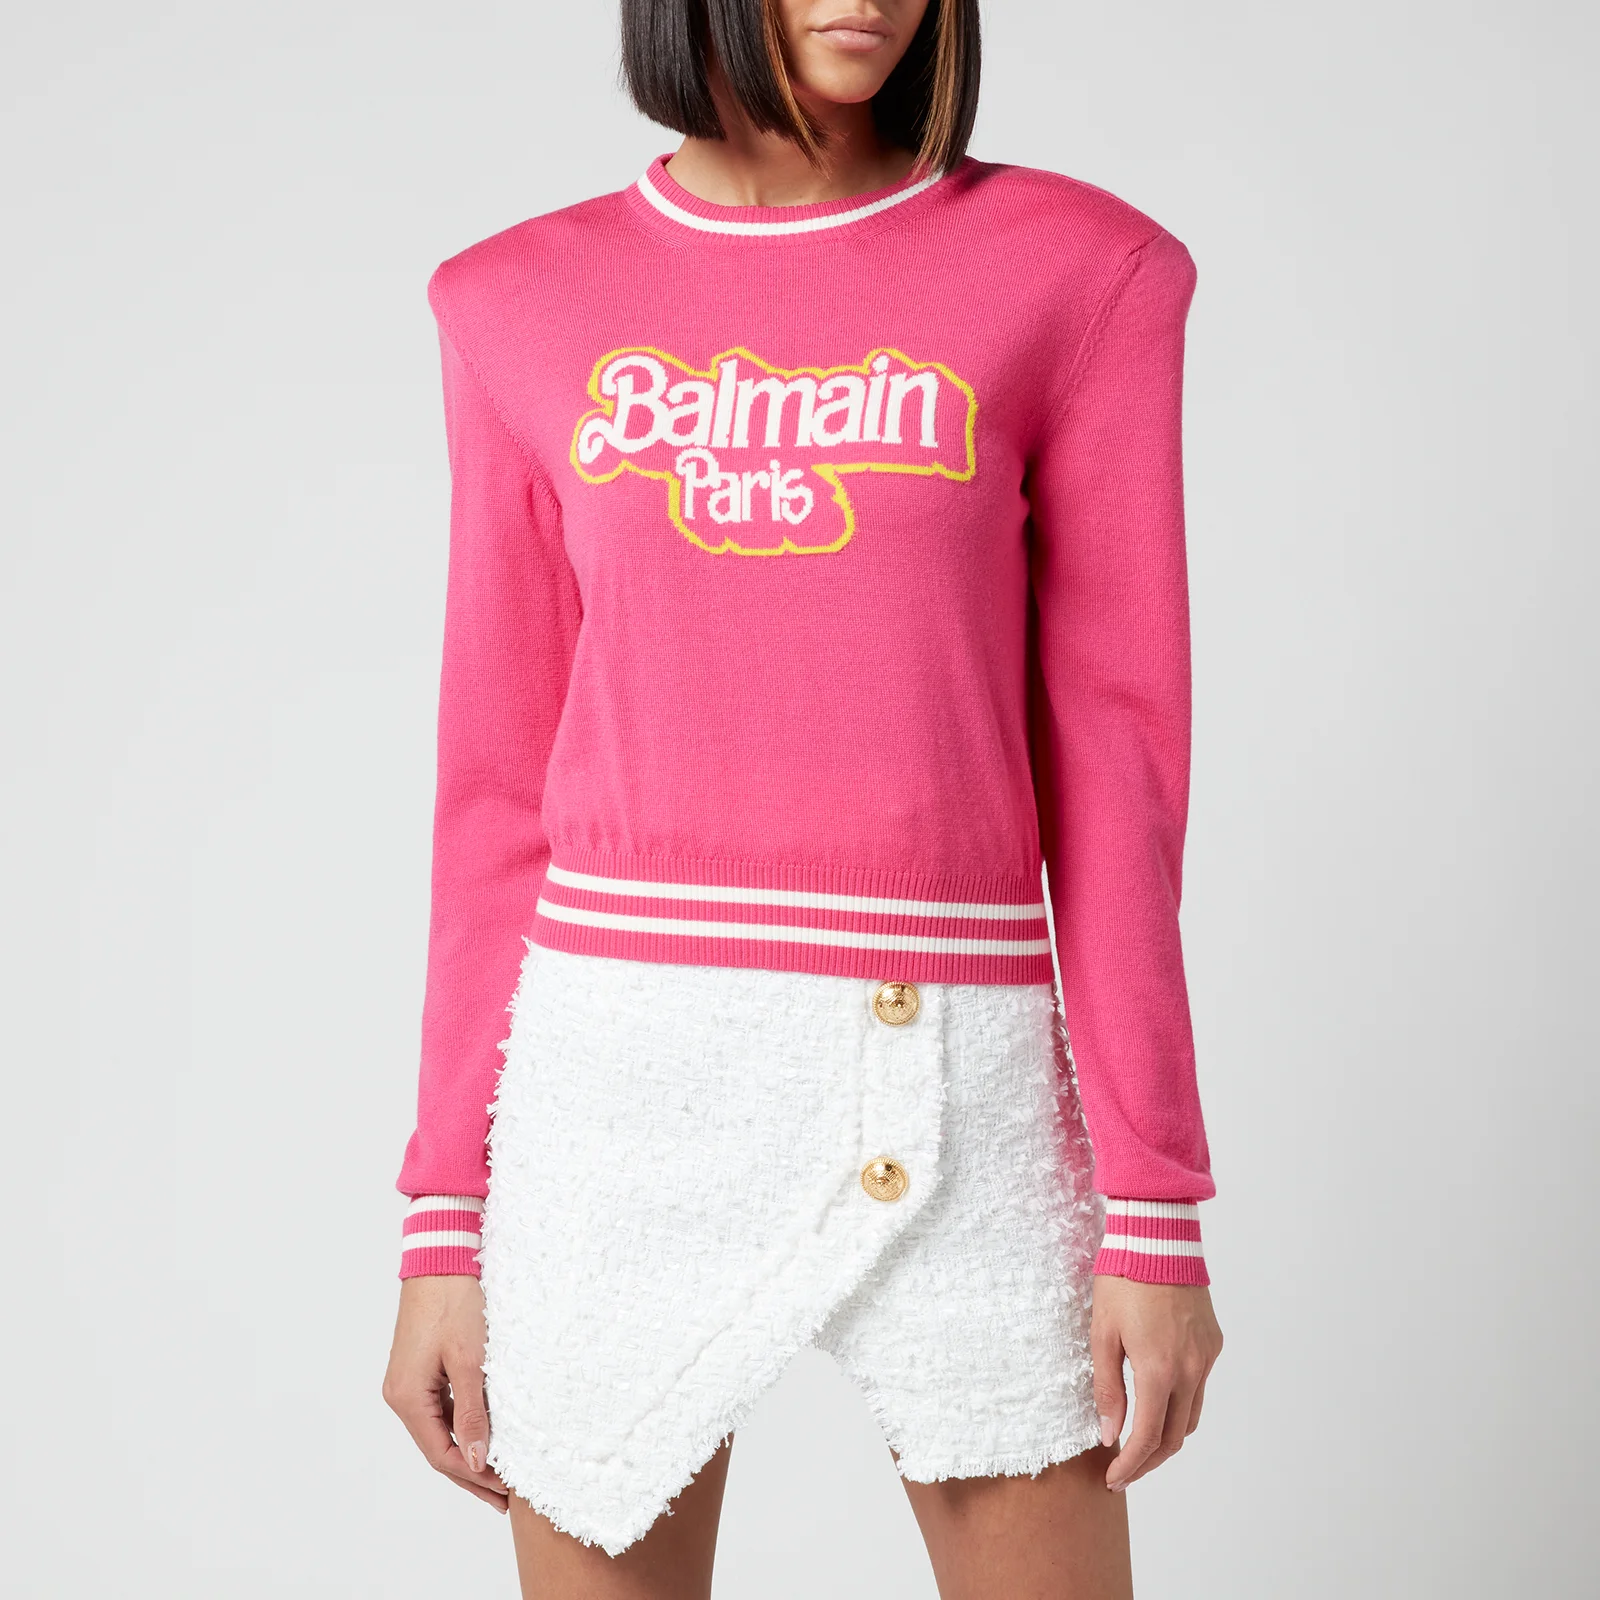 Balmain Women's Barbie Cropped Balmain Knitted Pullover - Pink Image 1